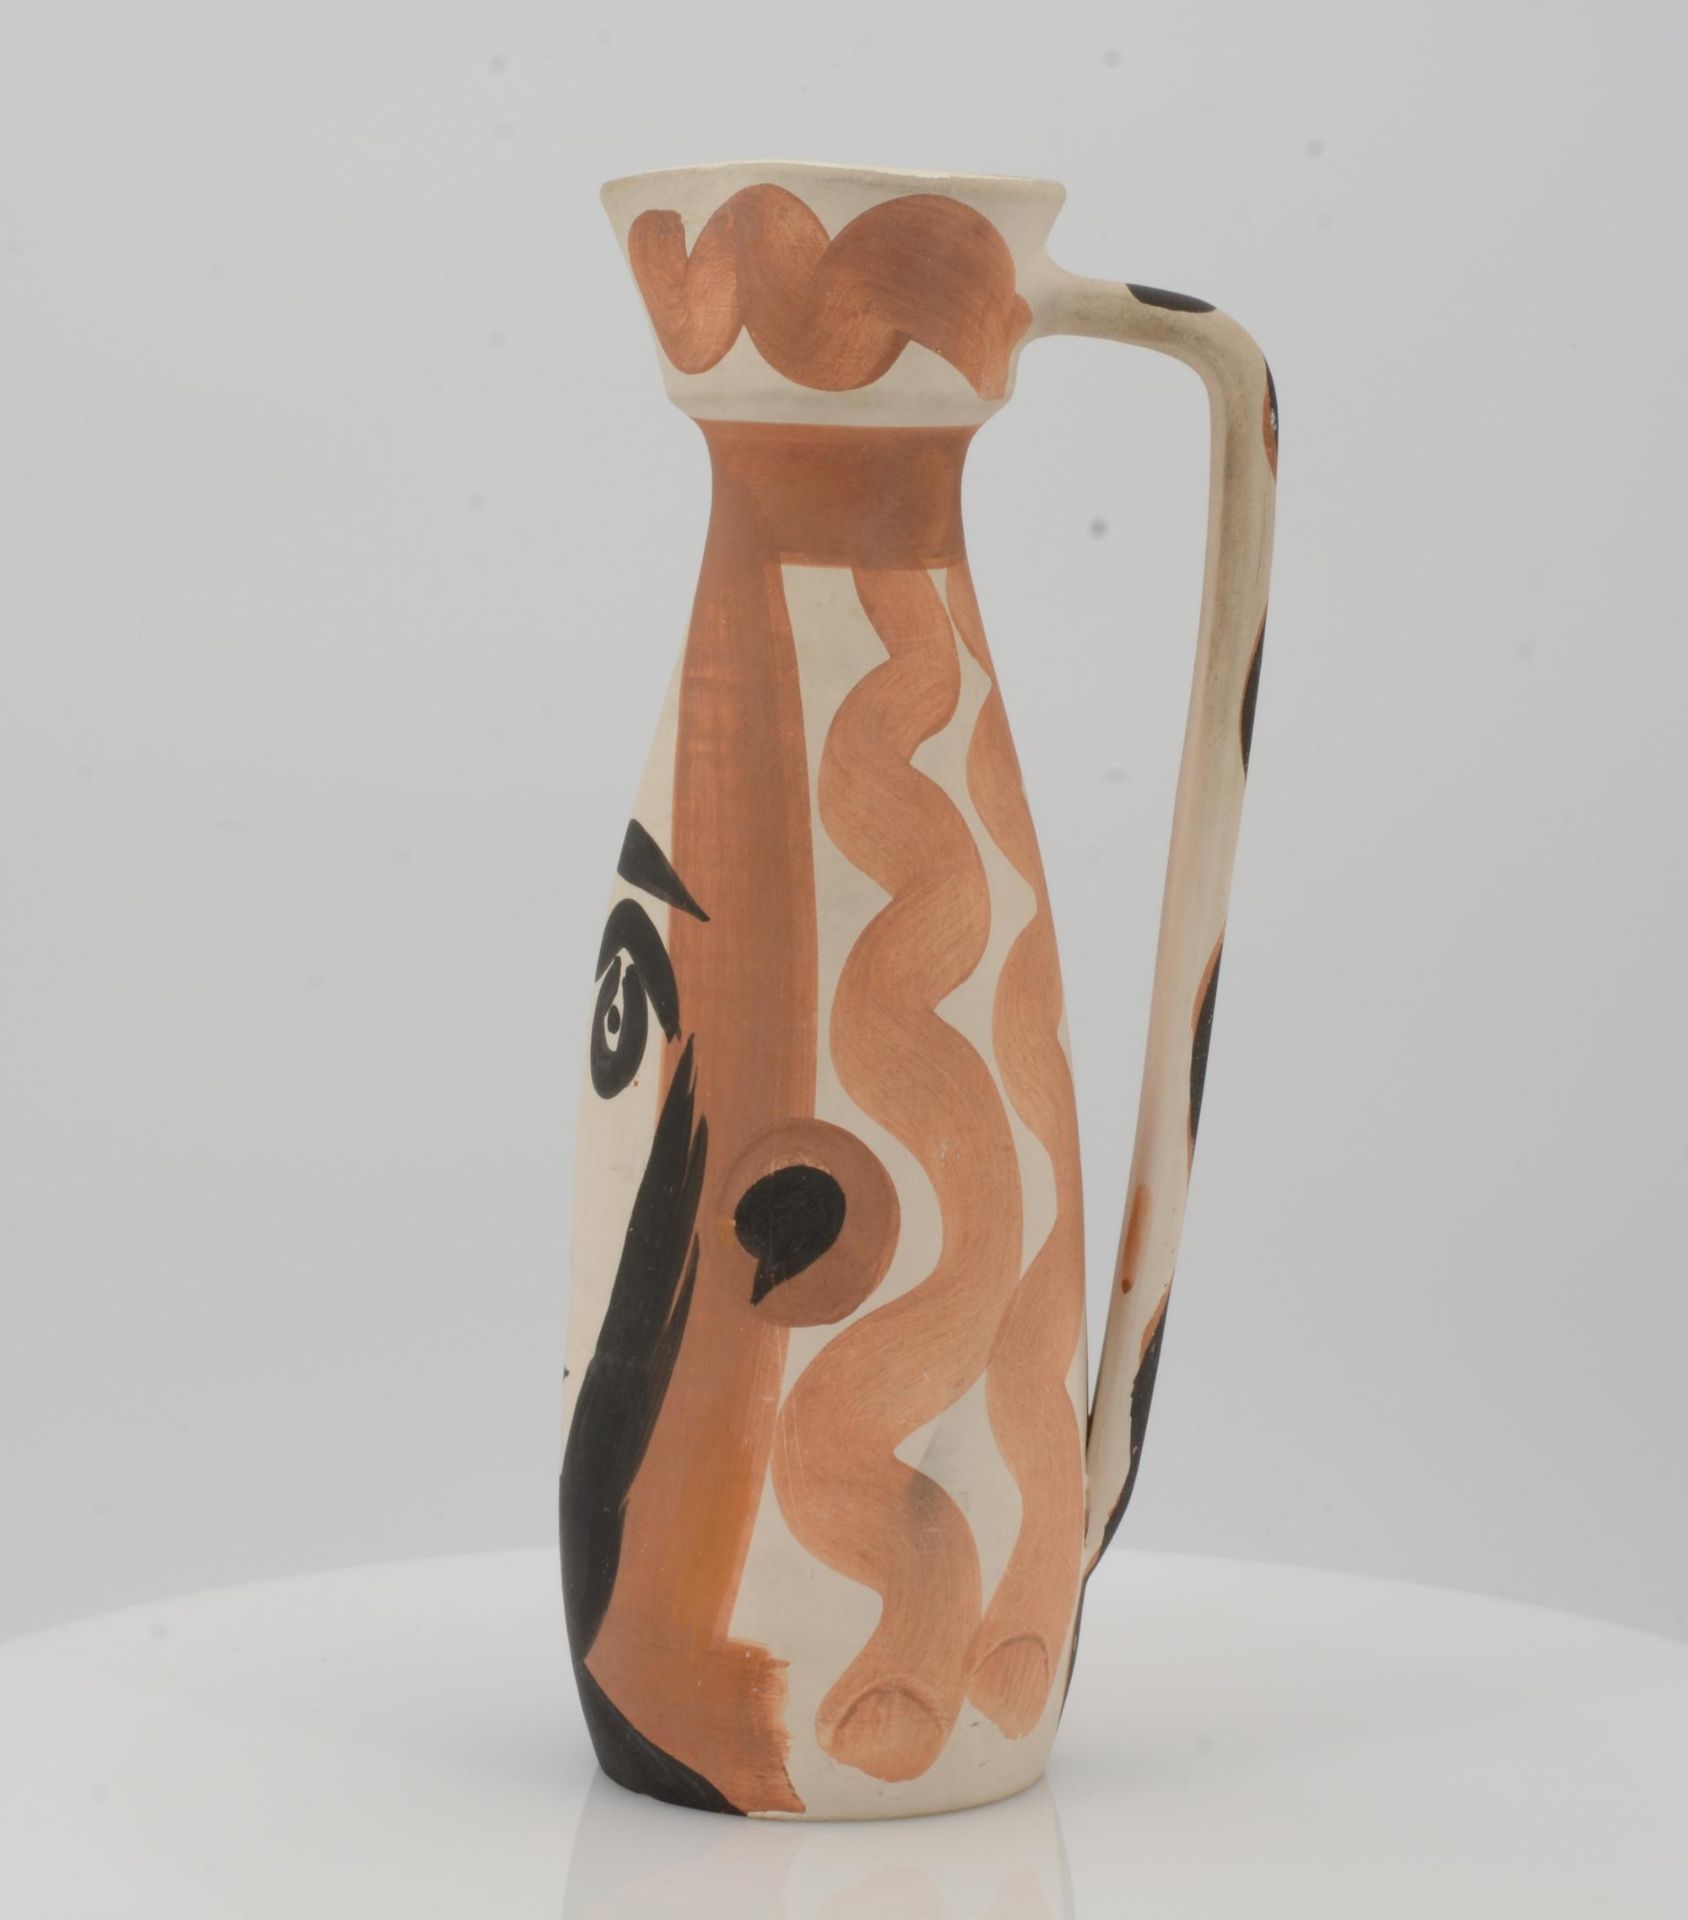 Picasso, Pablo1881 Malaga - 1973 MouginsFace. 1955. White earthenware clay, polychromed and glazed - Bild 2 aus 9